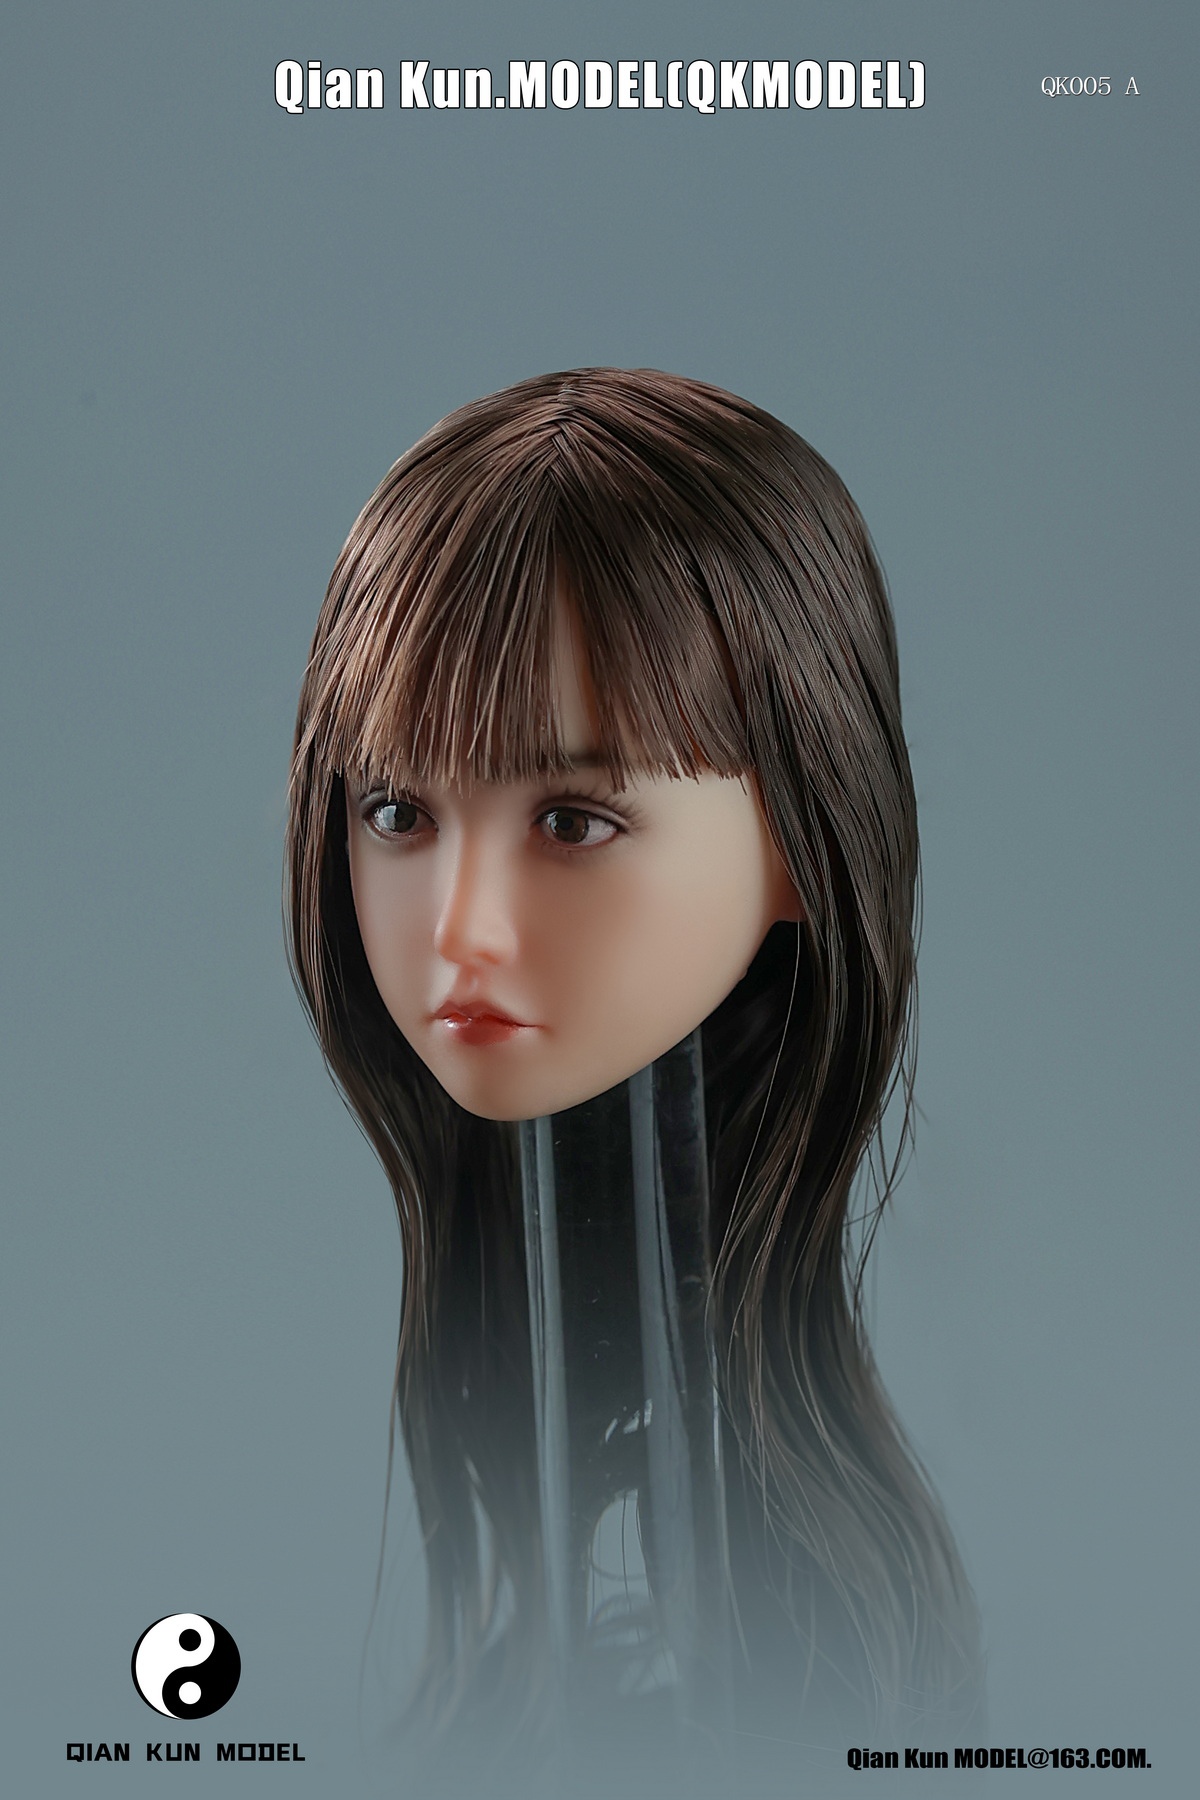 girl - NEW PRODUCT: Qian Kun.Model - Sweet Asian Female Head Sculpture (QK005-A/B/C) 03100